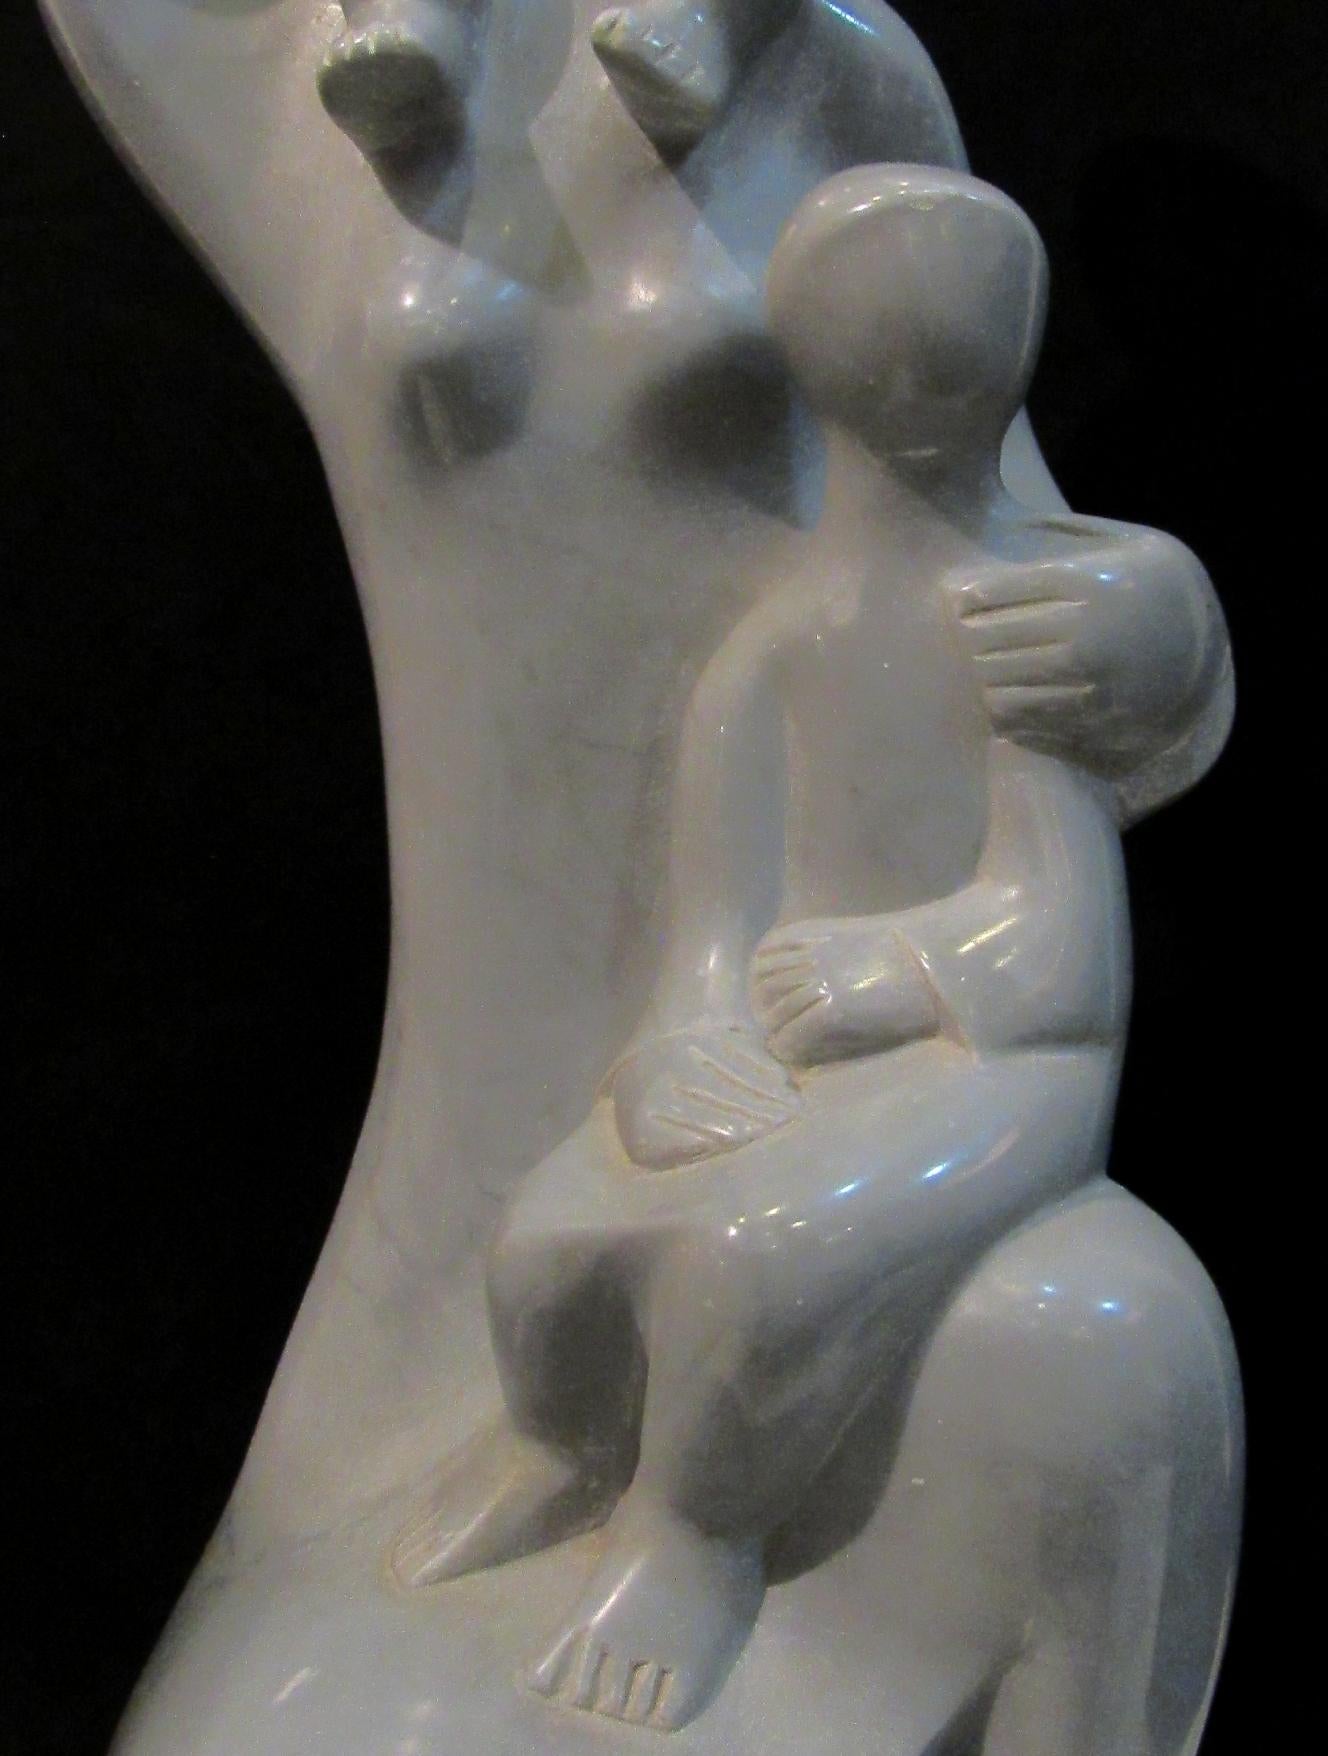 Daniel Kafri, "Family", 1989, grey bordilio marble sculpture, 67x24x26 cm